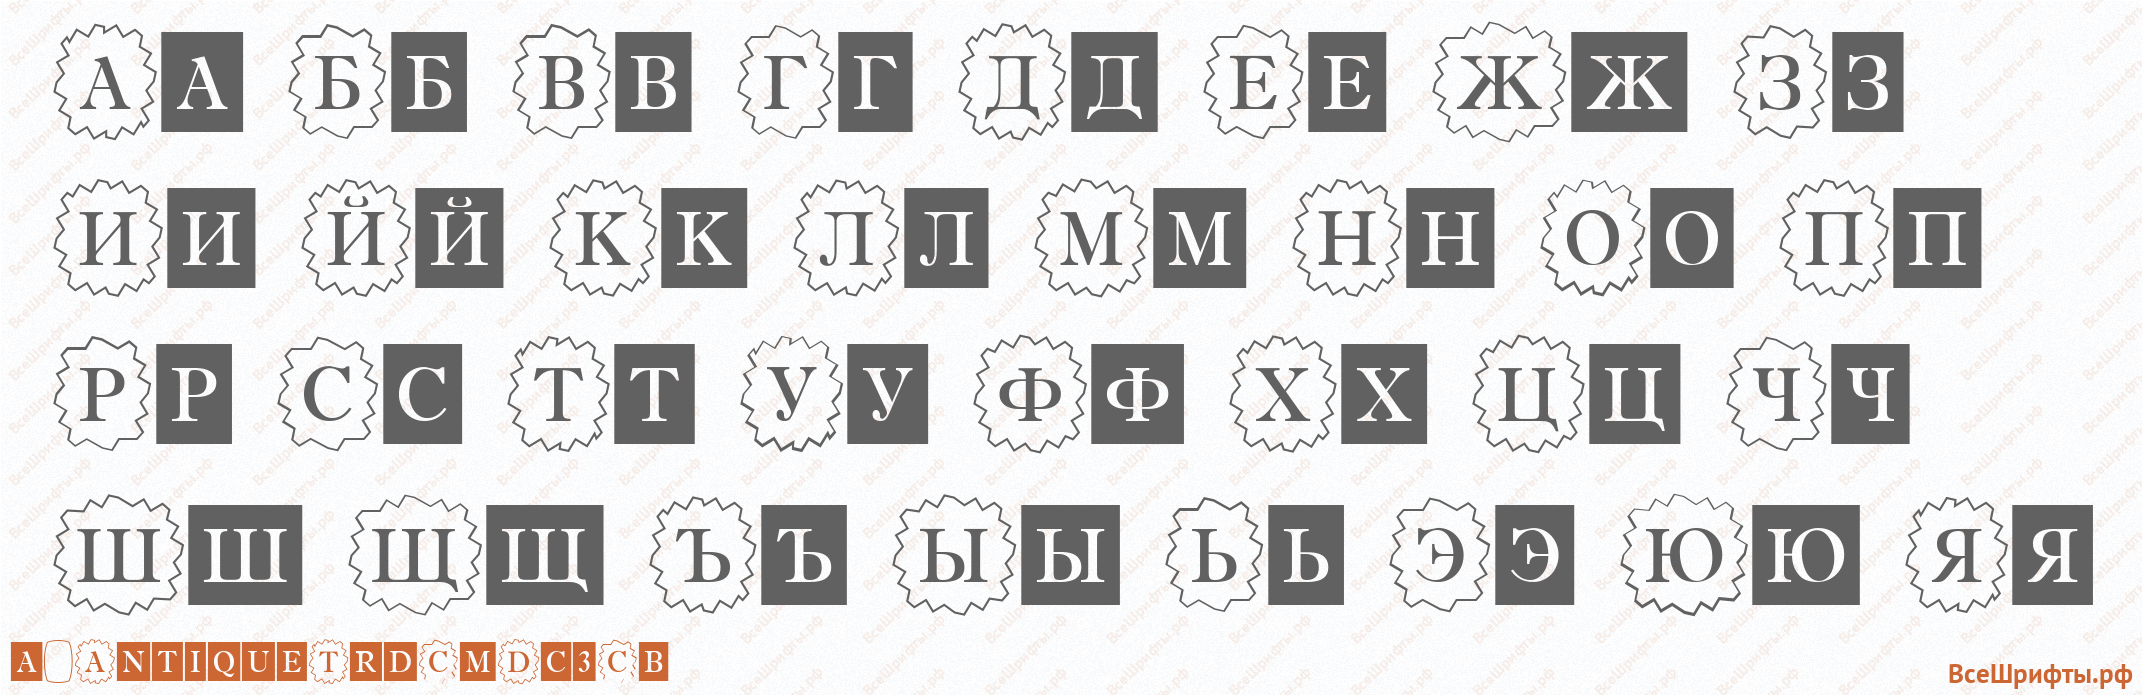 Шрифт a_AntiqueTrdCmDc3Cb с русскими буквами